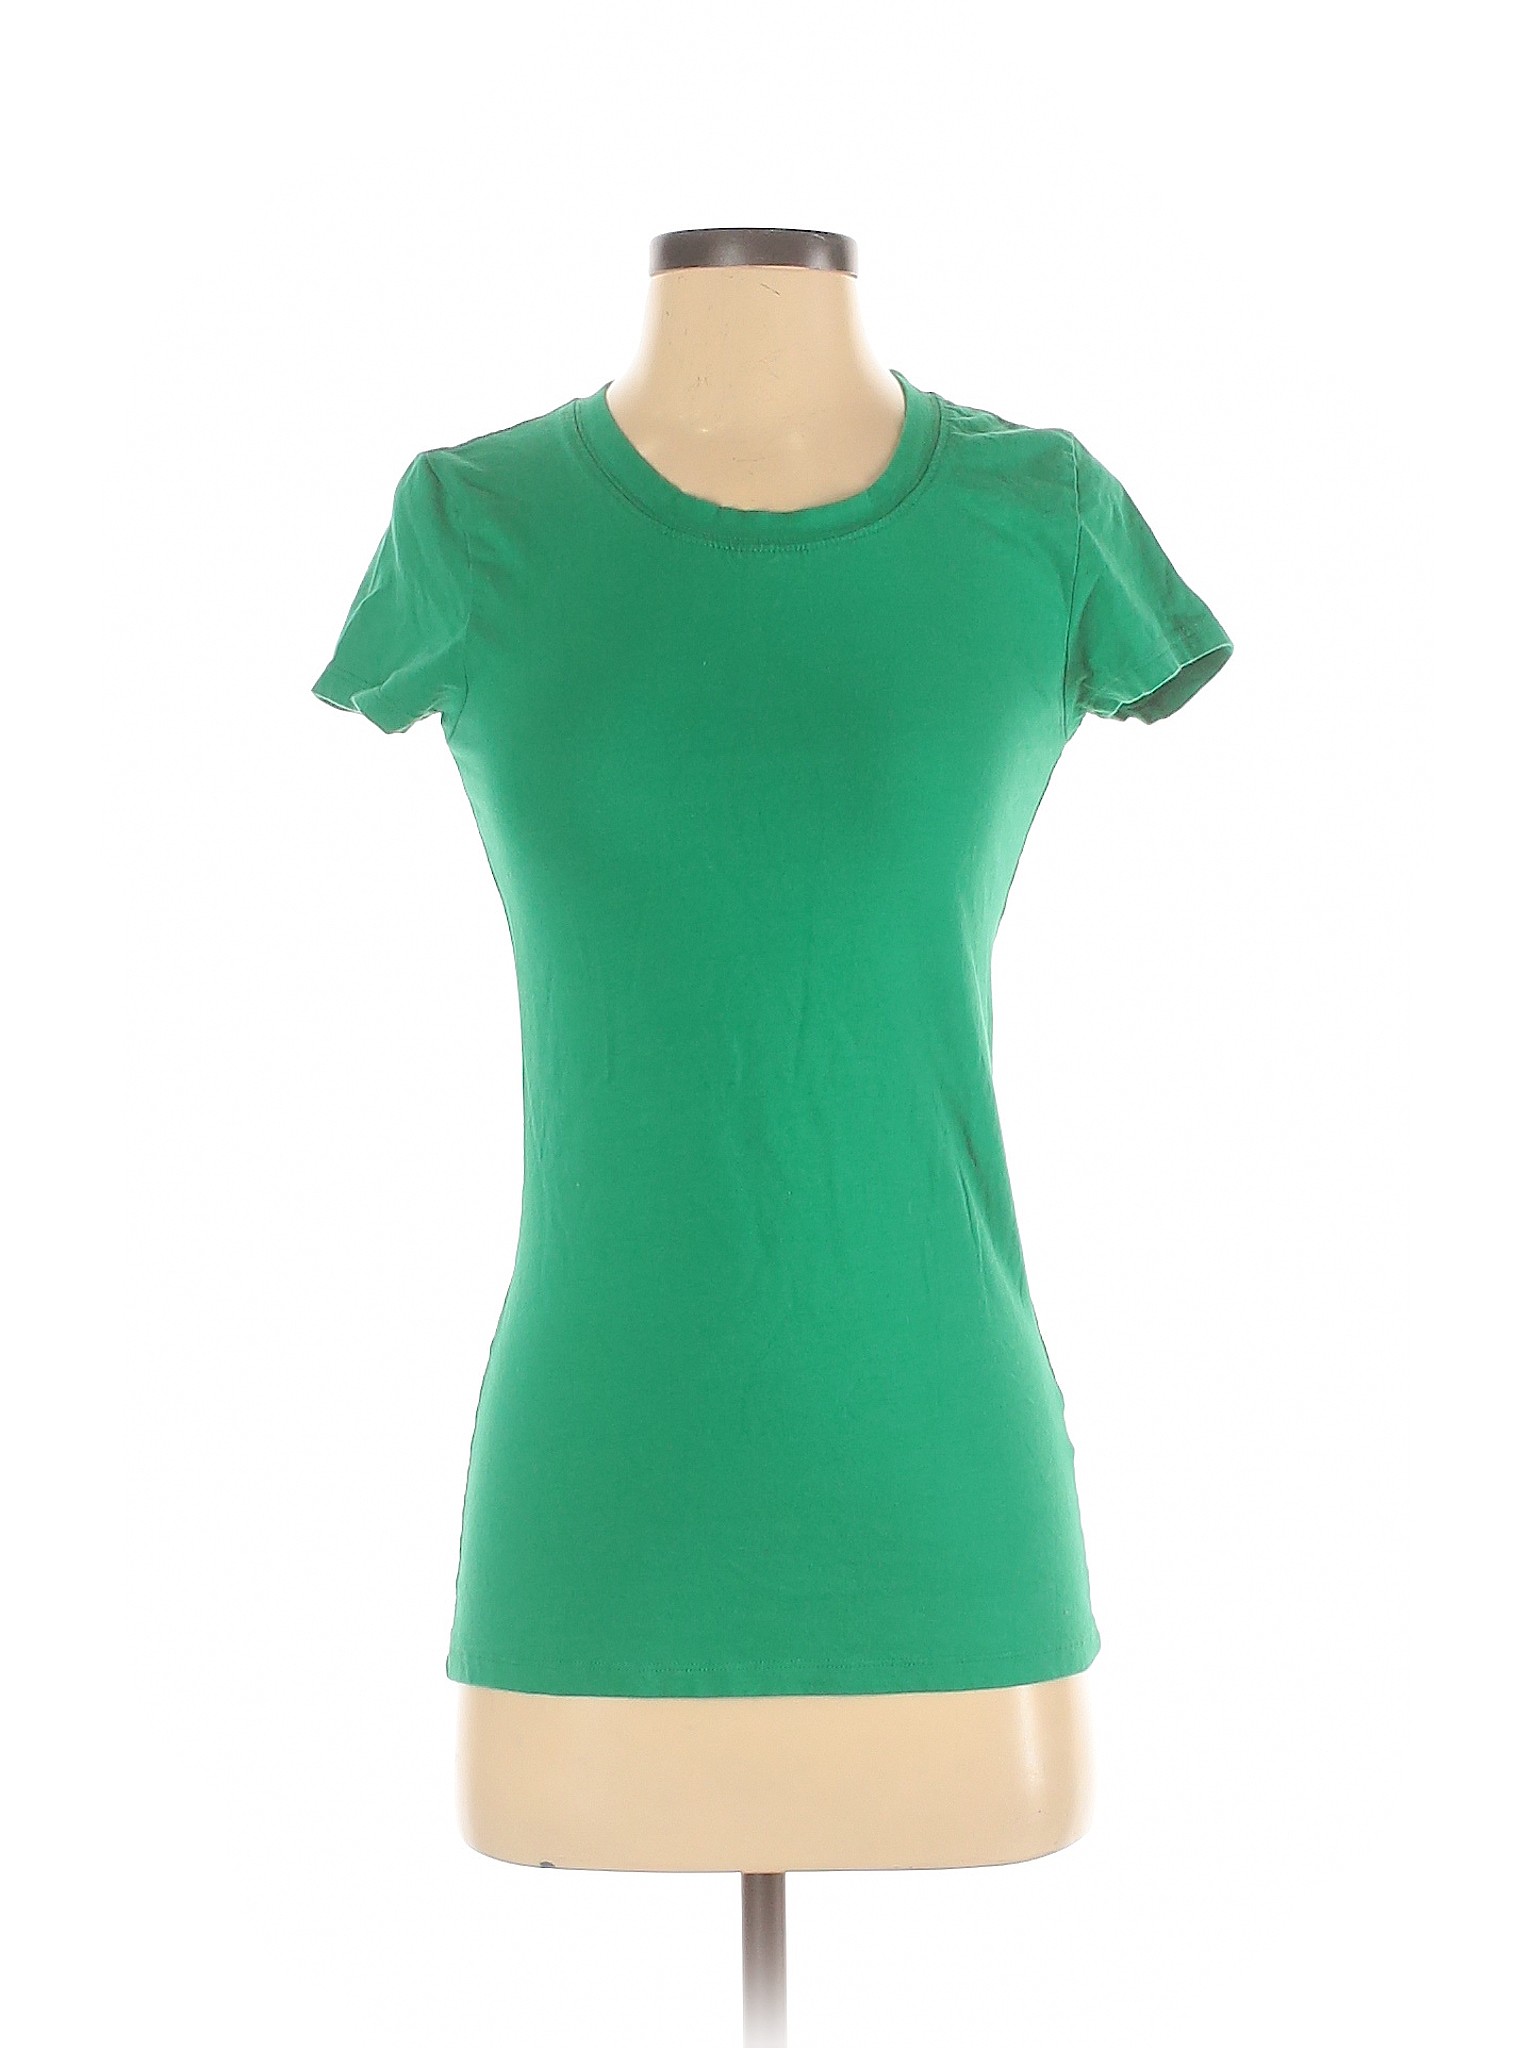 Unbranded Women Green Short Sleeve T-Shirt S | eBay